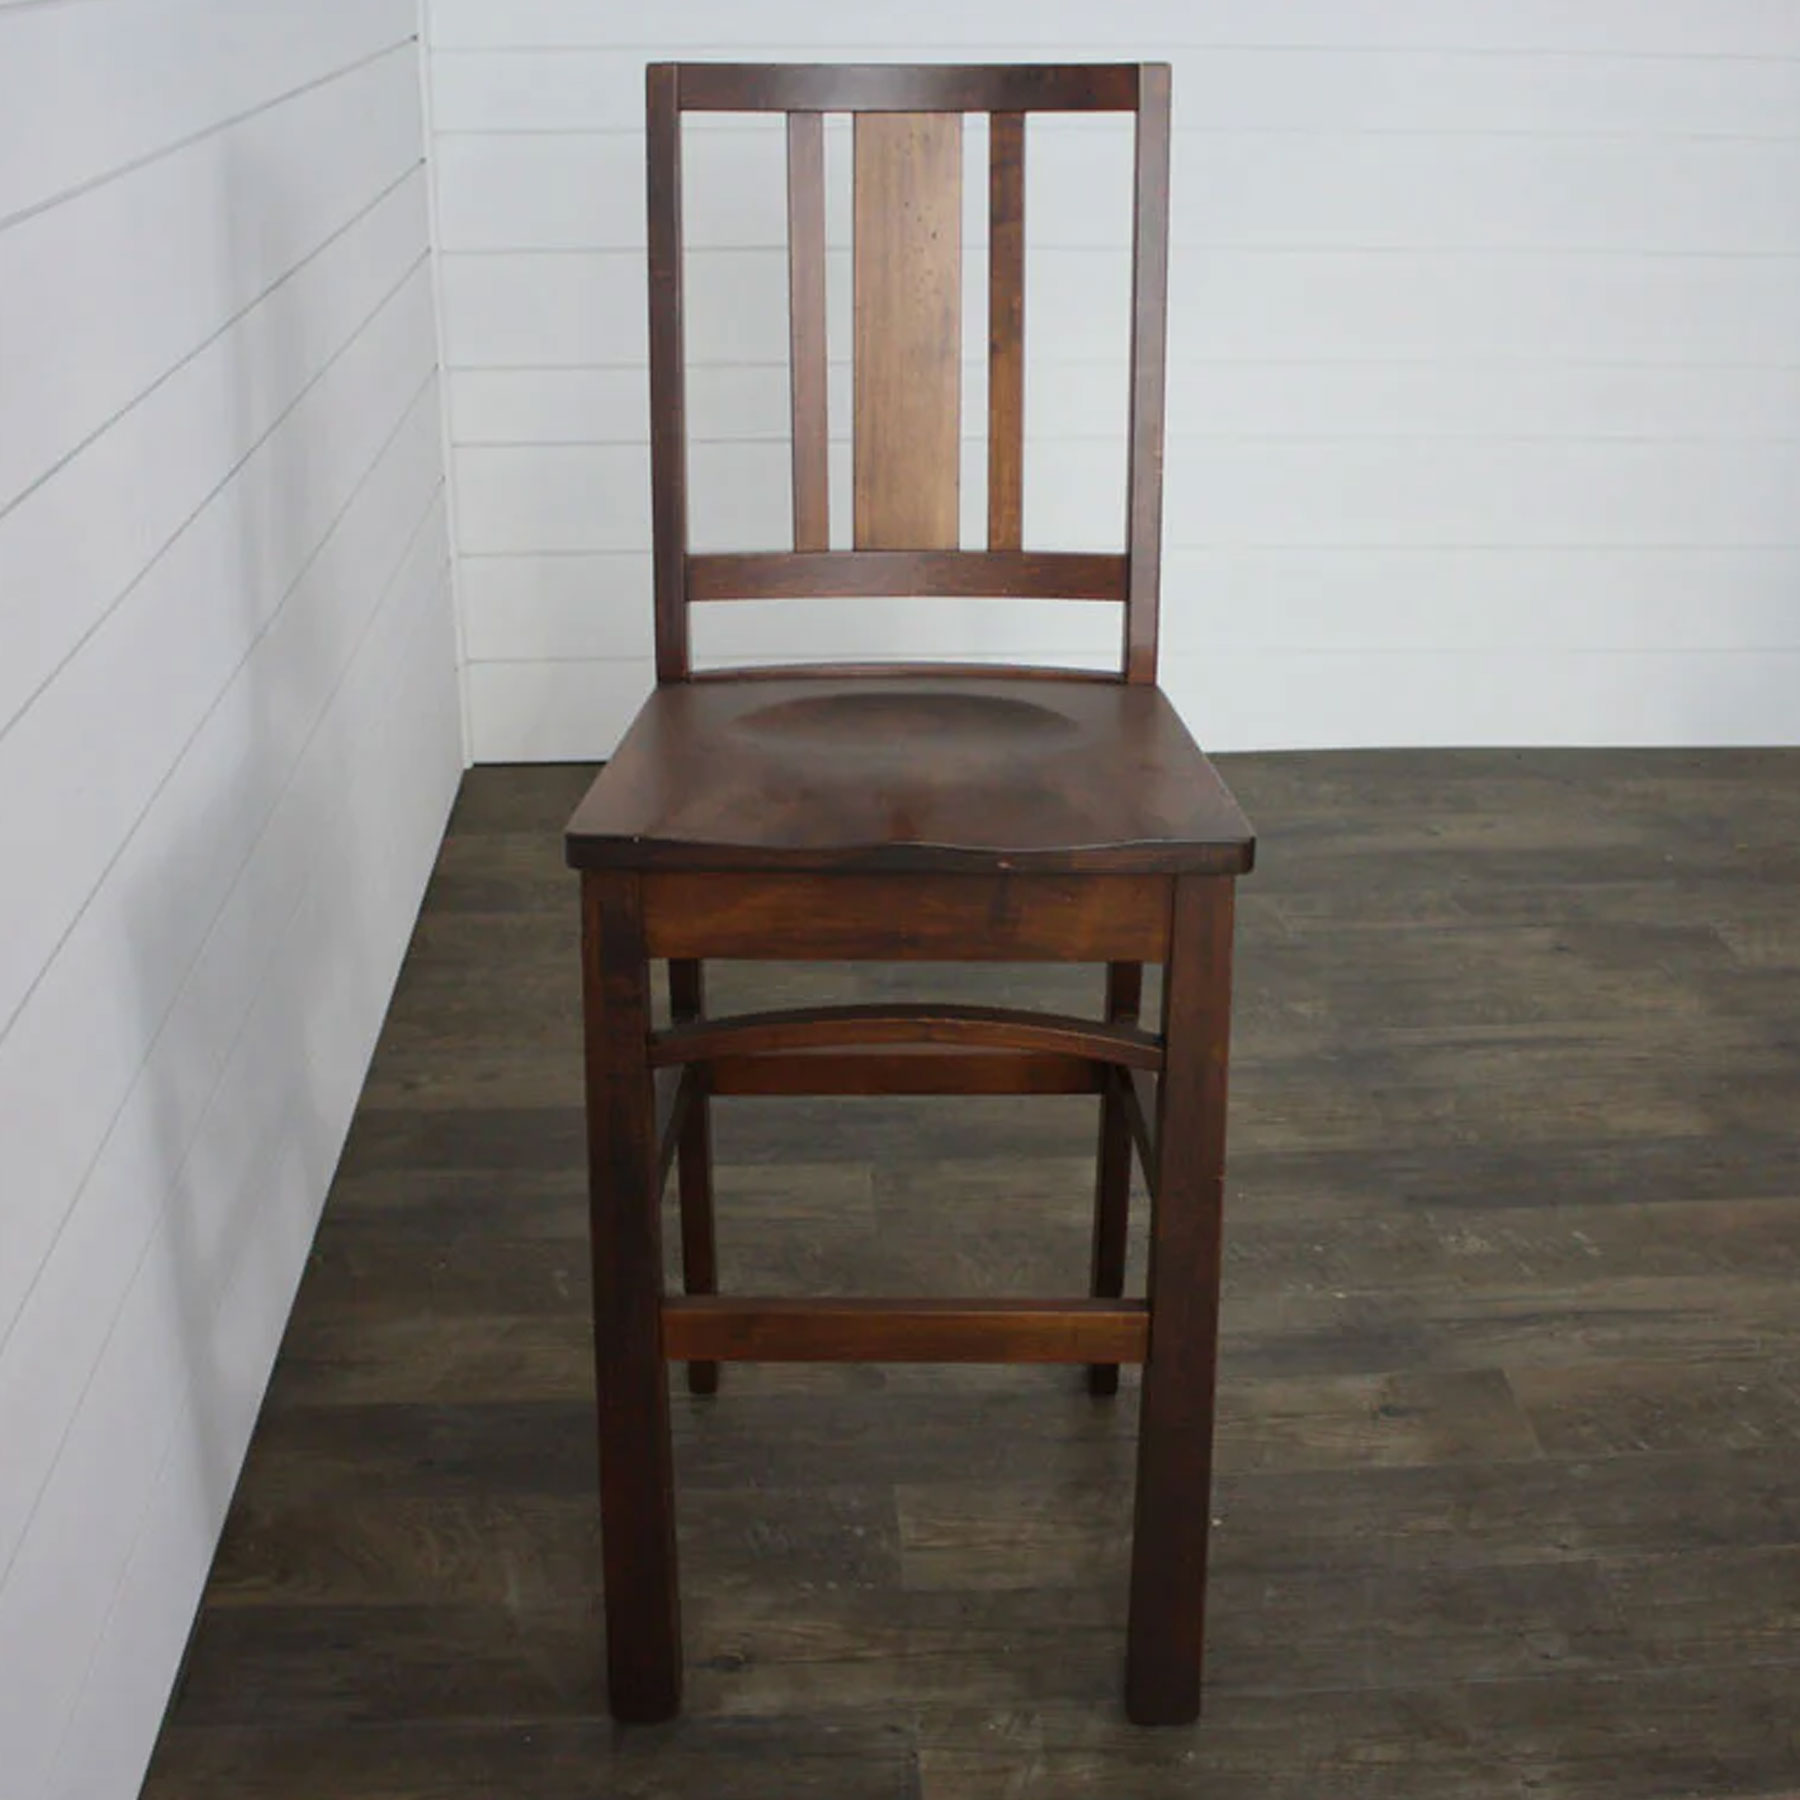 Hudson 30 inch Bar Chair in Brown Maple